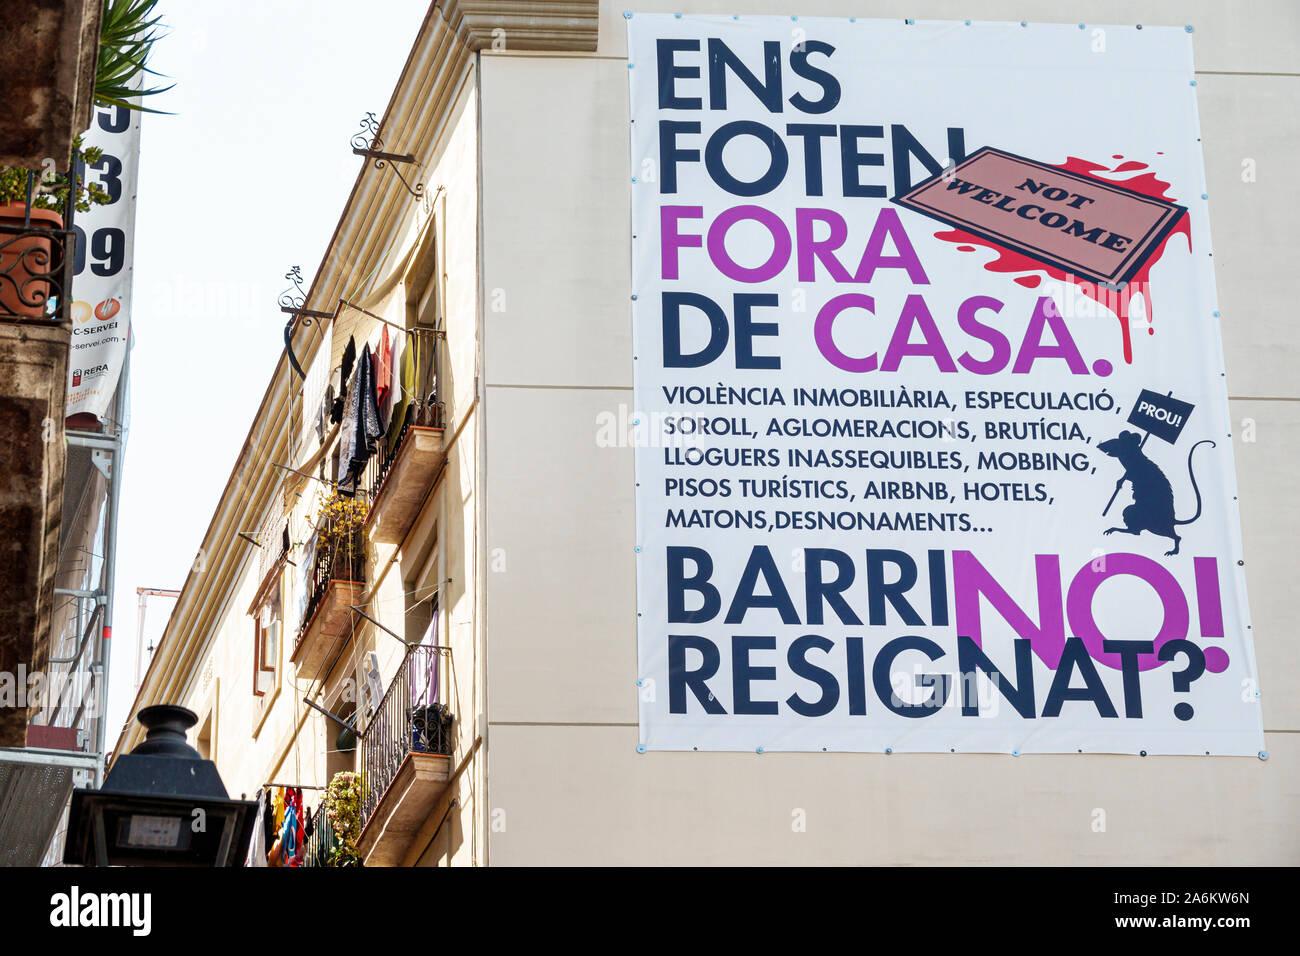 Barcelona Spain,Catalonia Ciutat Vella,El Raval,building exterior,neighborhood anti violence crime campaign,poster,Catalan language,ES190824058 Stock Photo